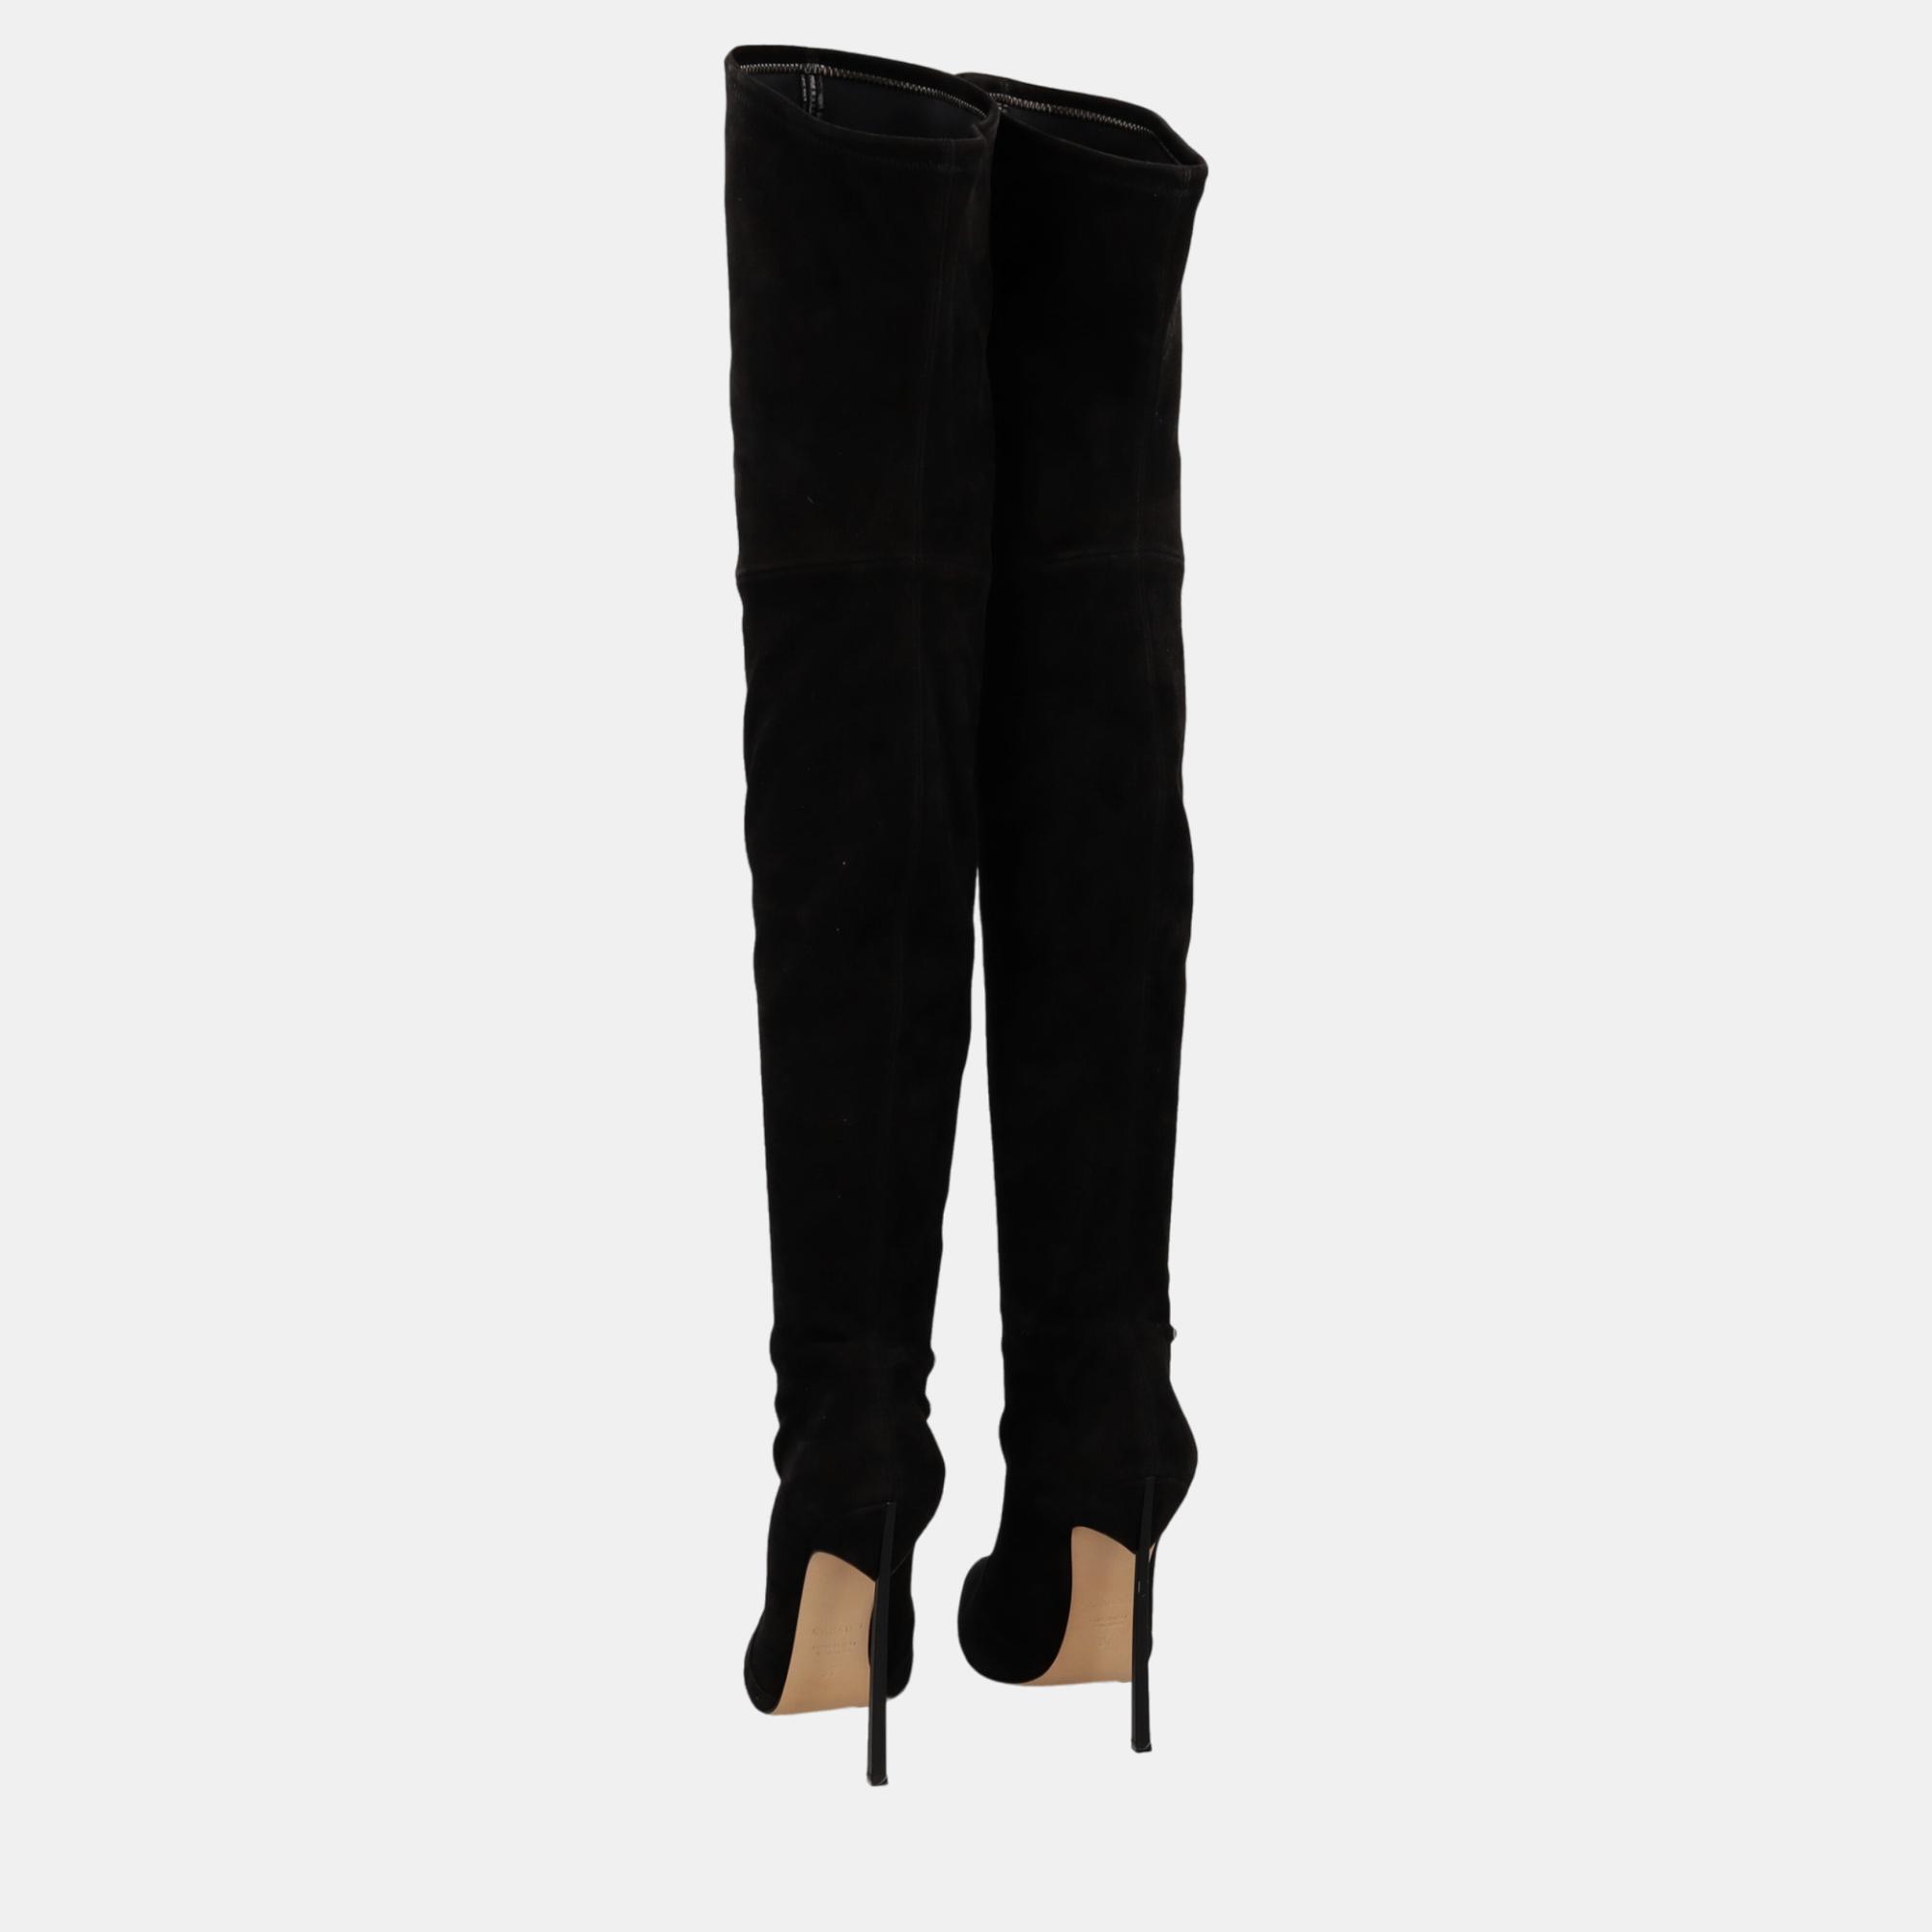 Casadei  Women's Leather Boots - Black - EU 37